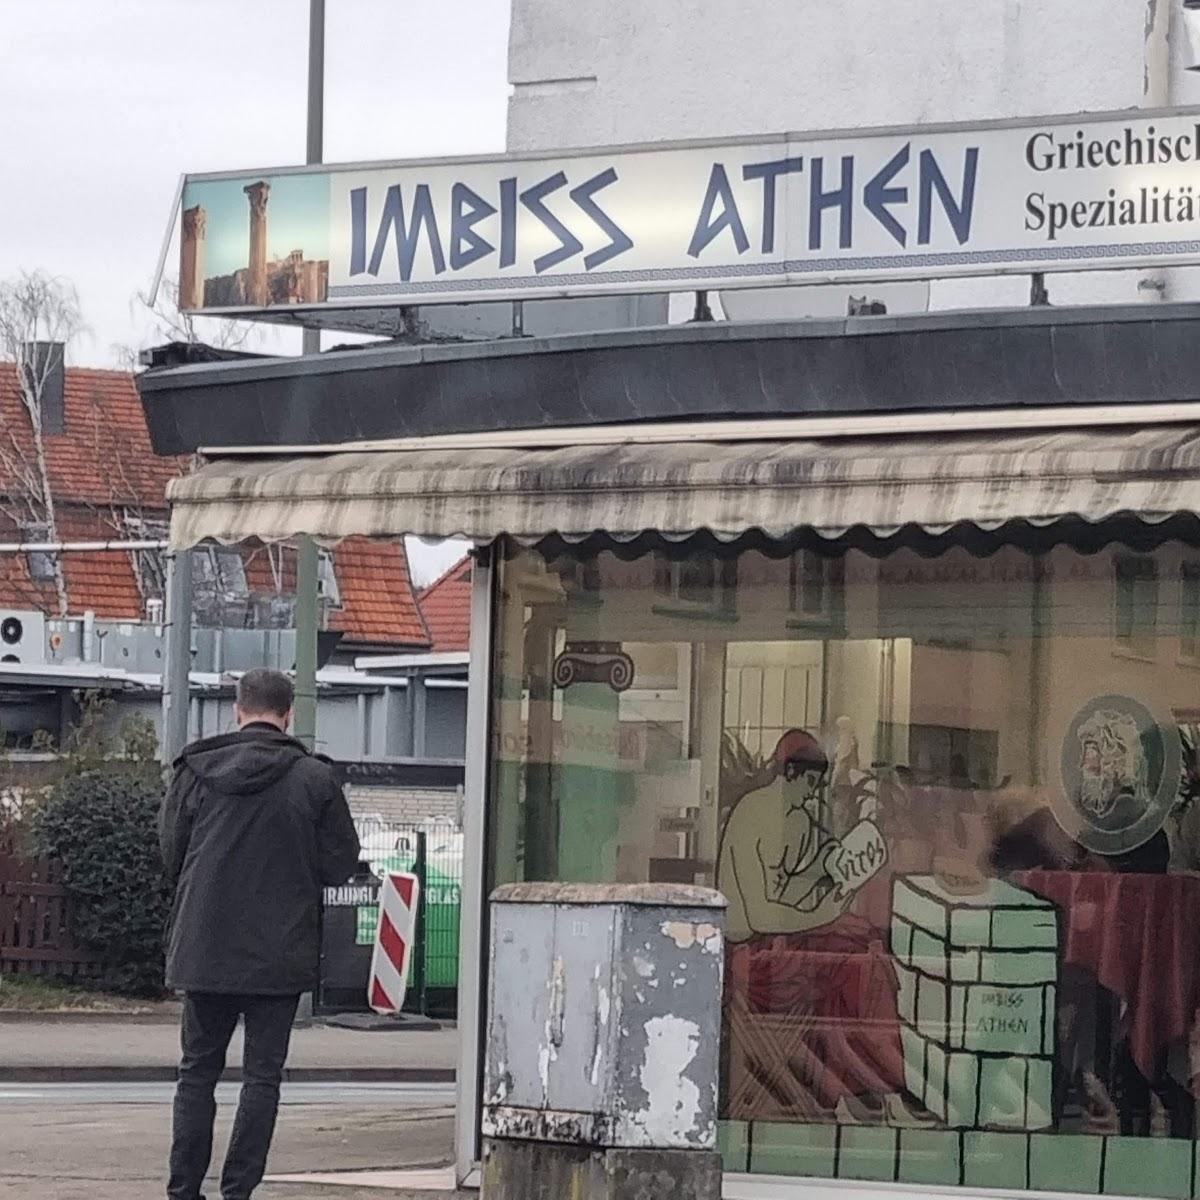 Restaurant "Imbiss Athen" in Osnabrück